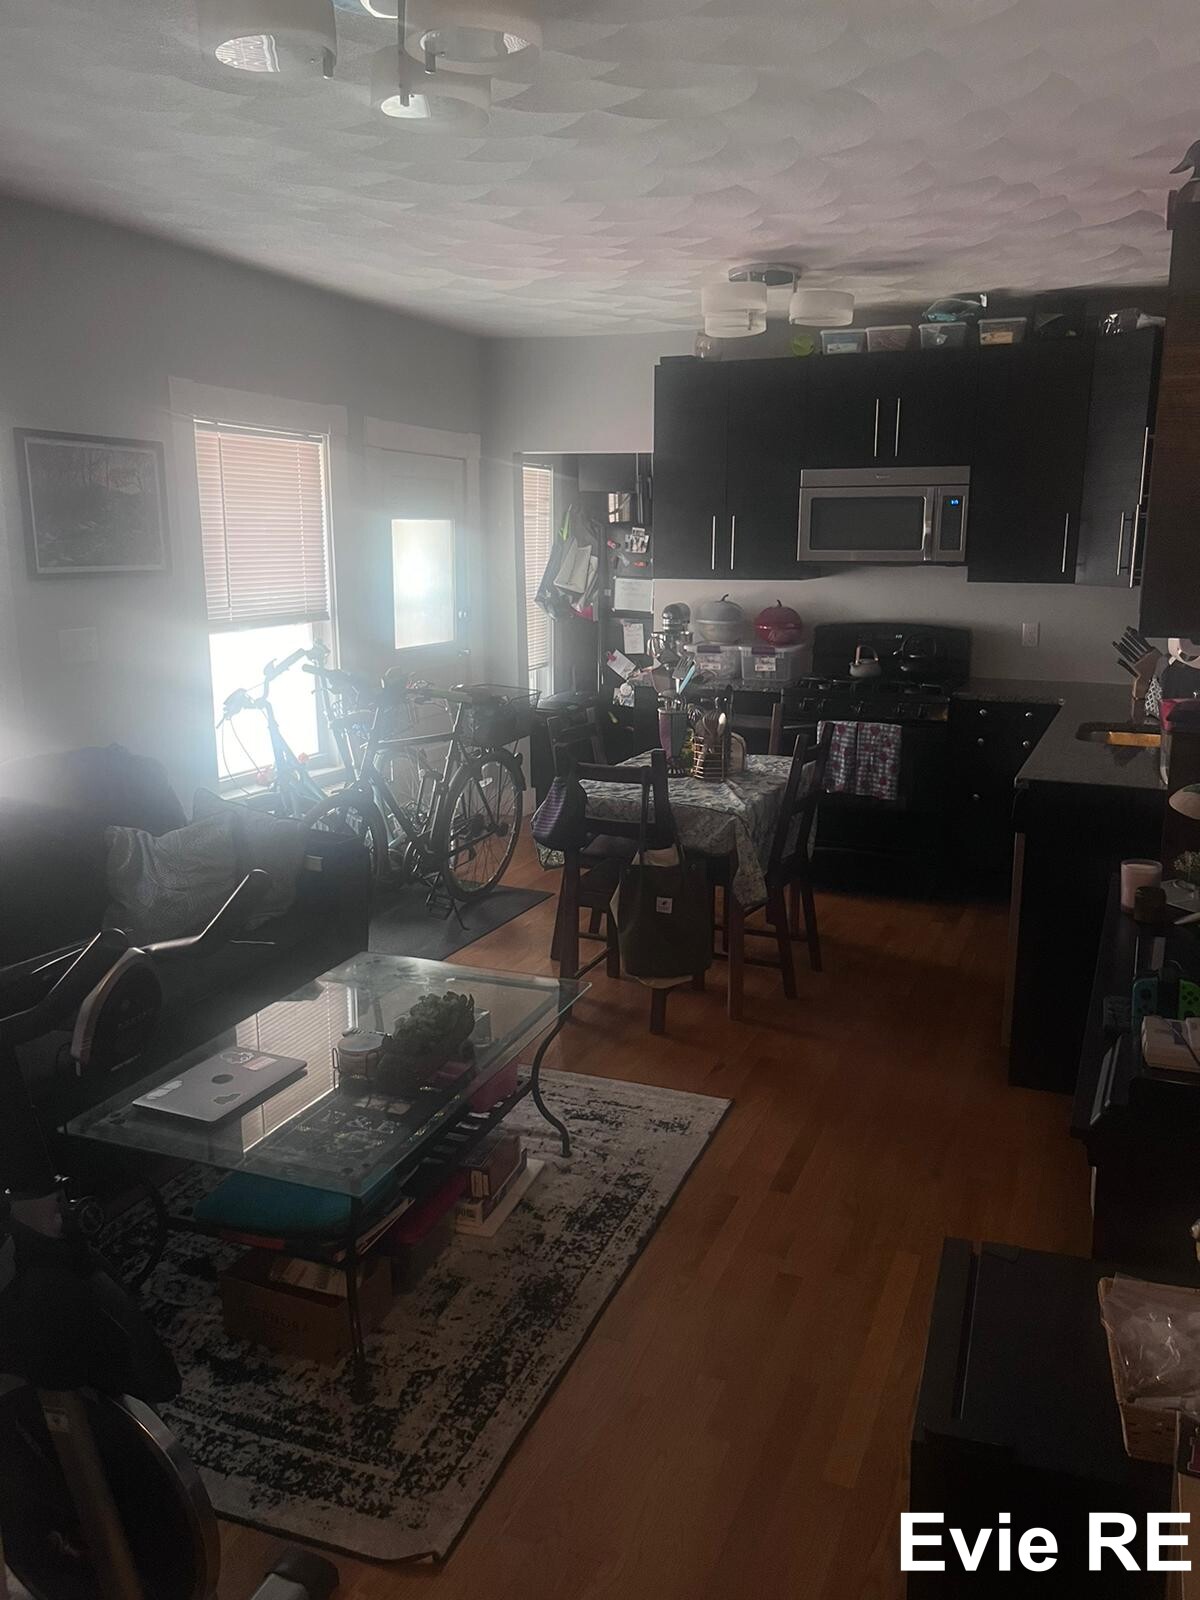 Photos of apartment on Hano St.,Boston MA 02134